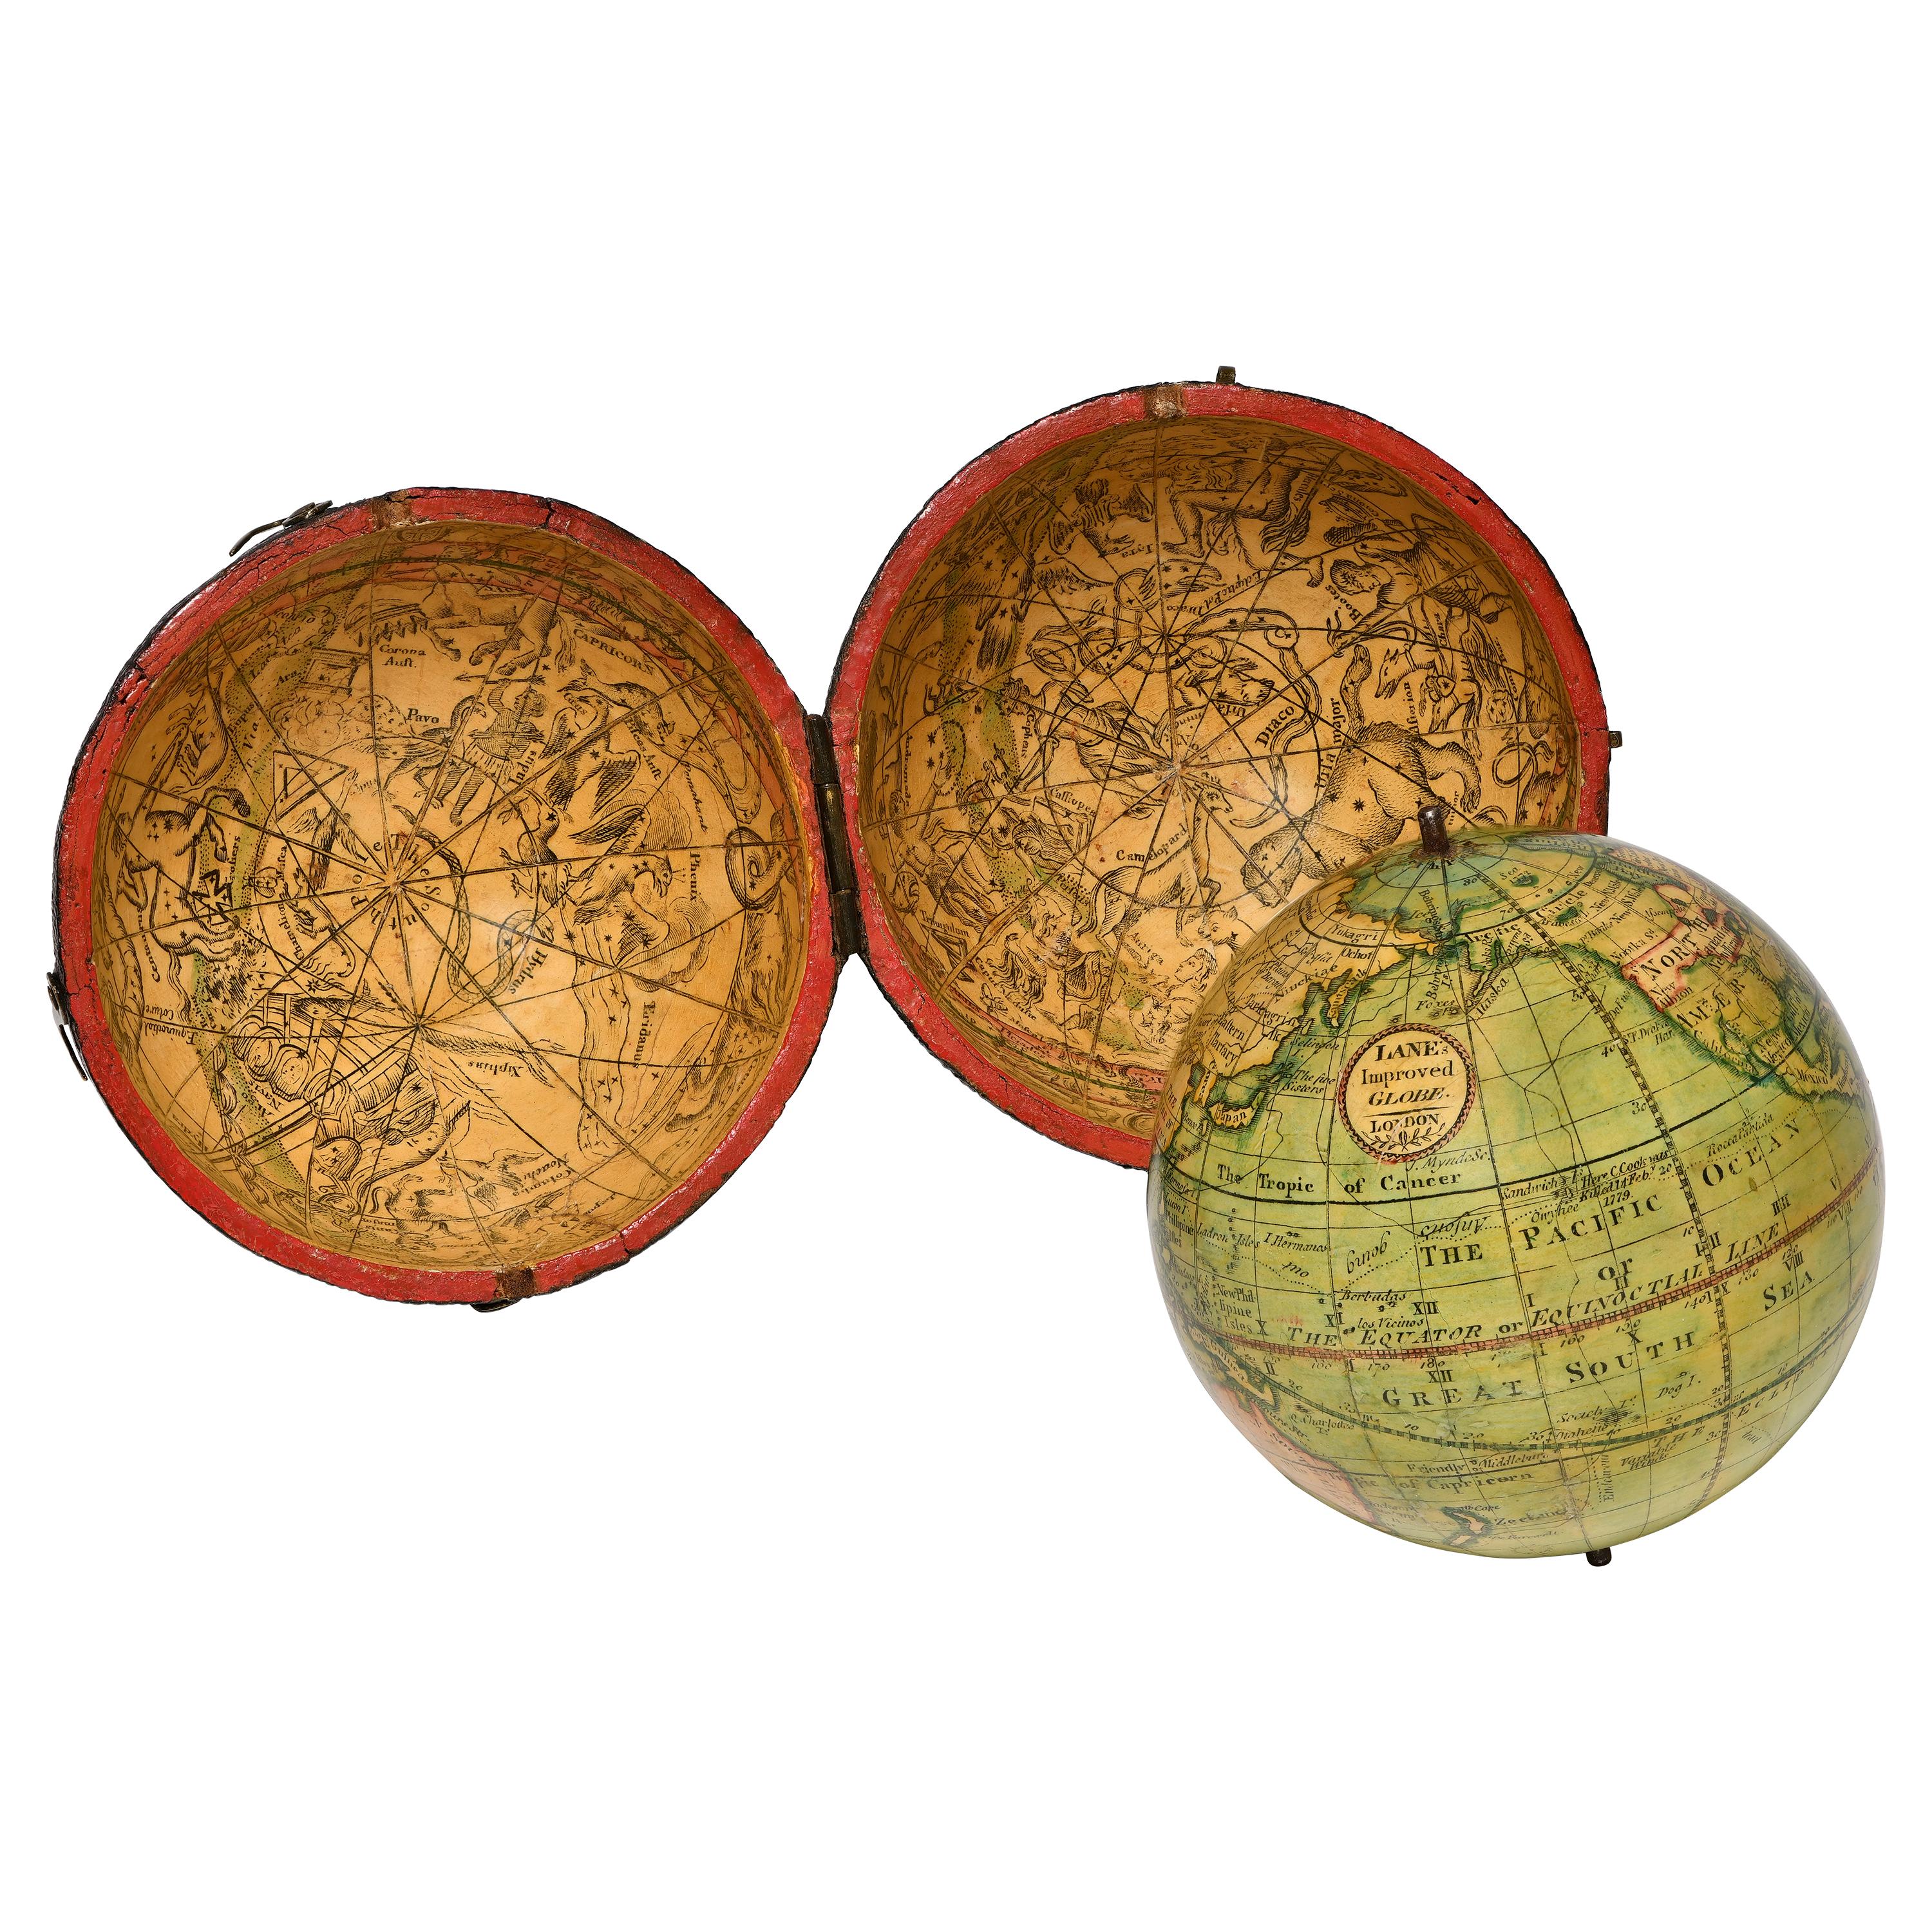 English Pocket Globe by Lane, London, between 1817 and 1833